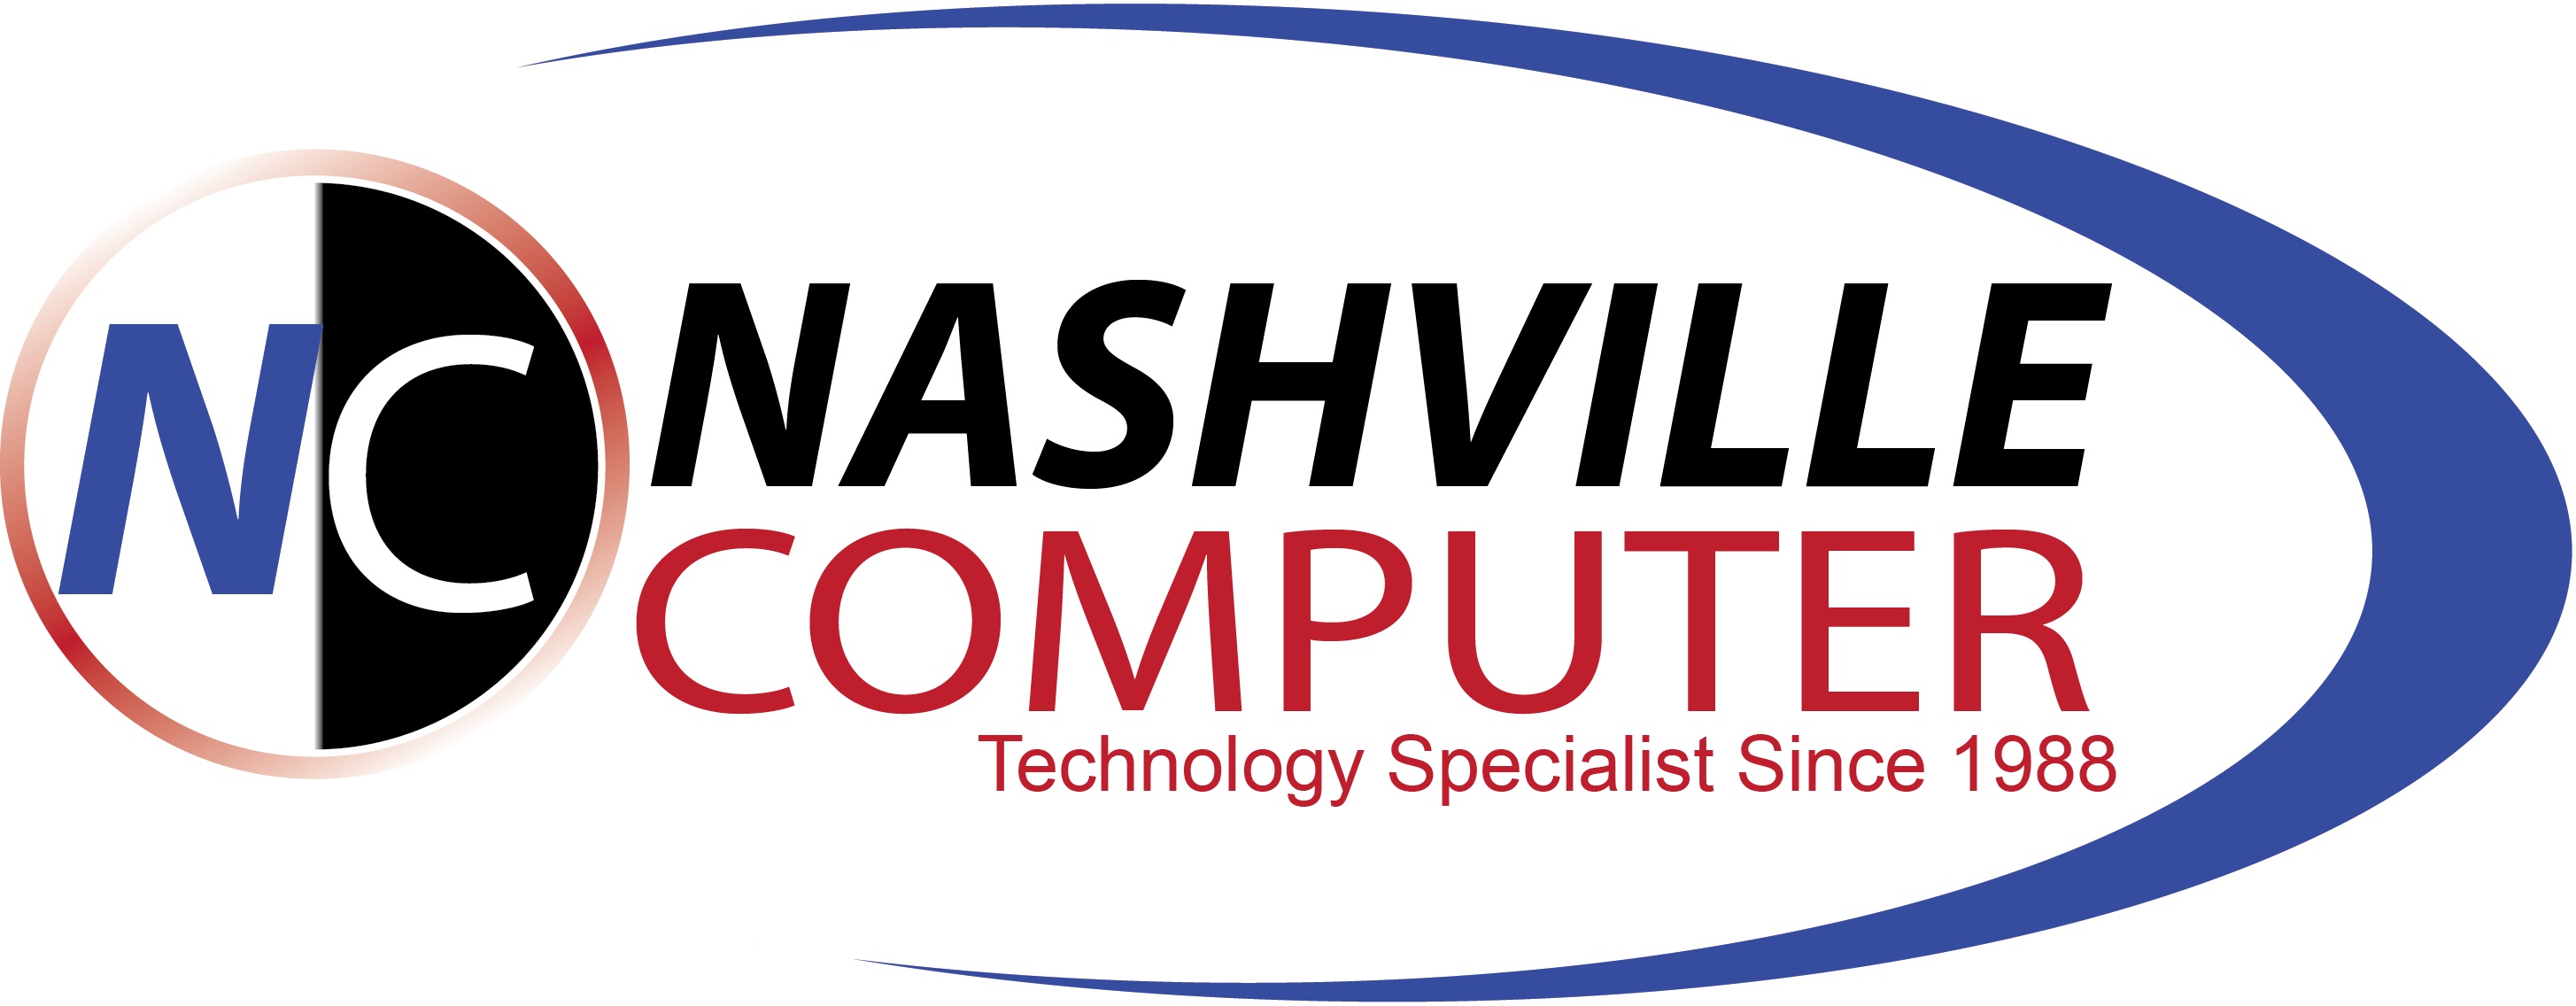 Nashville Computer, Inc.